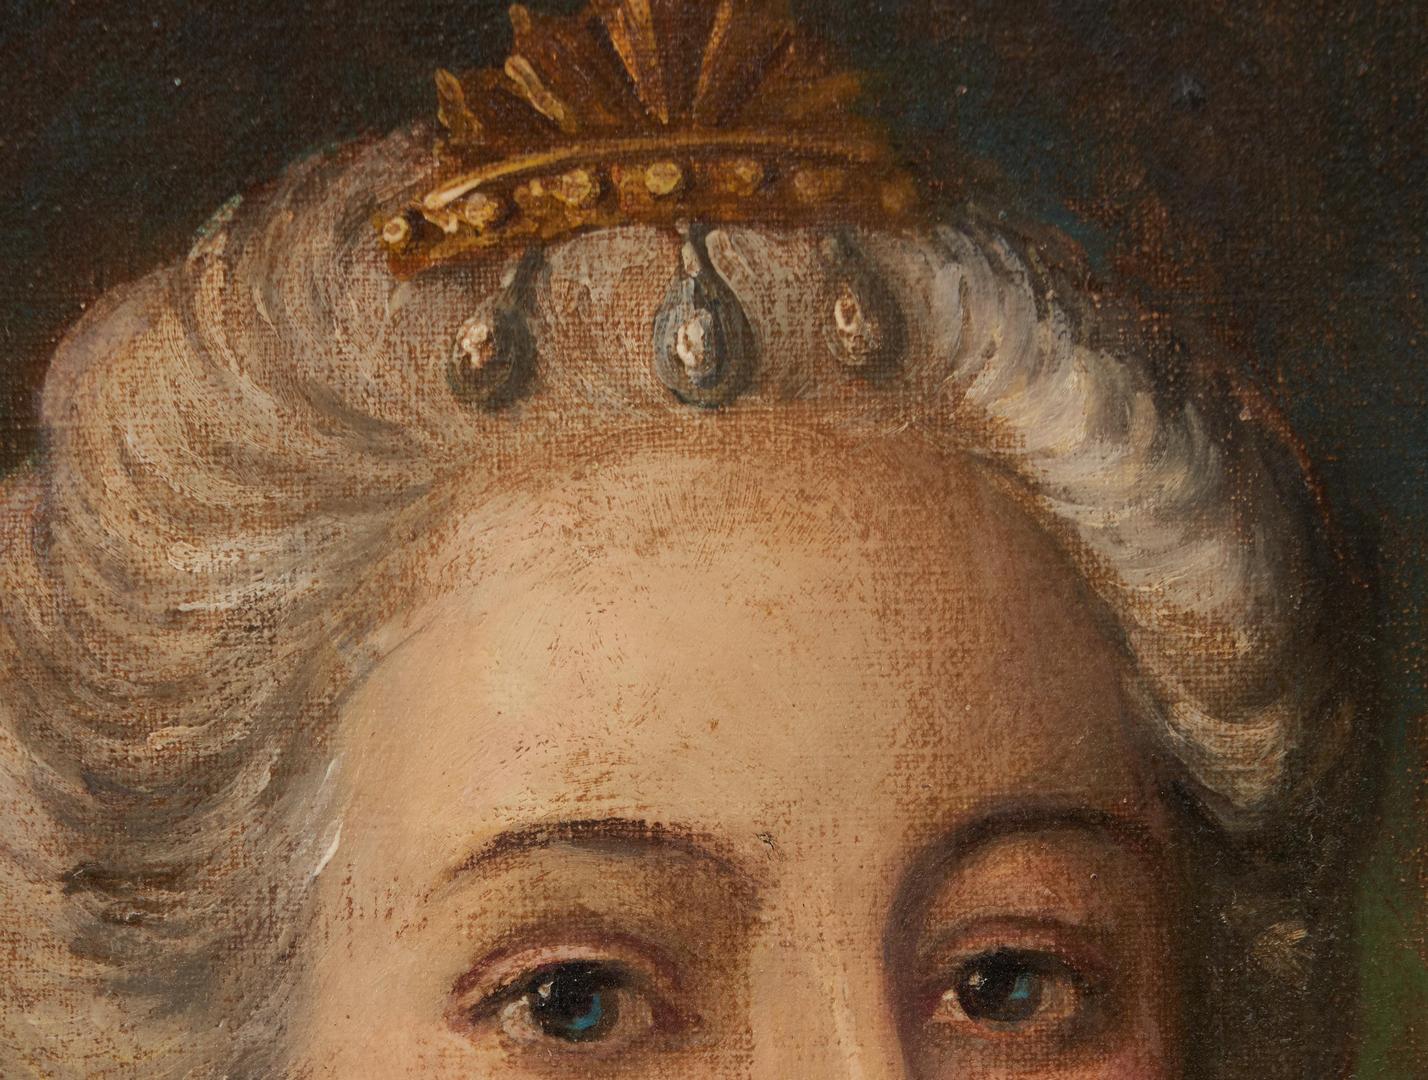 Lot 918: Austrian School O/C Royal Portrait of Maria Theresa